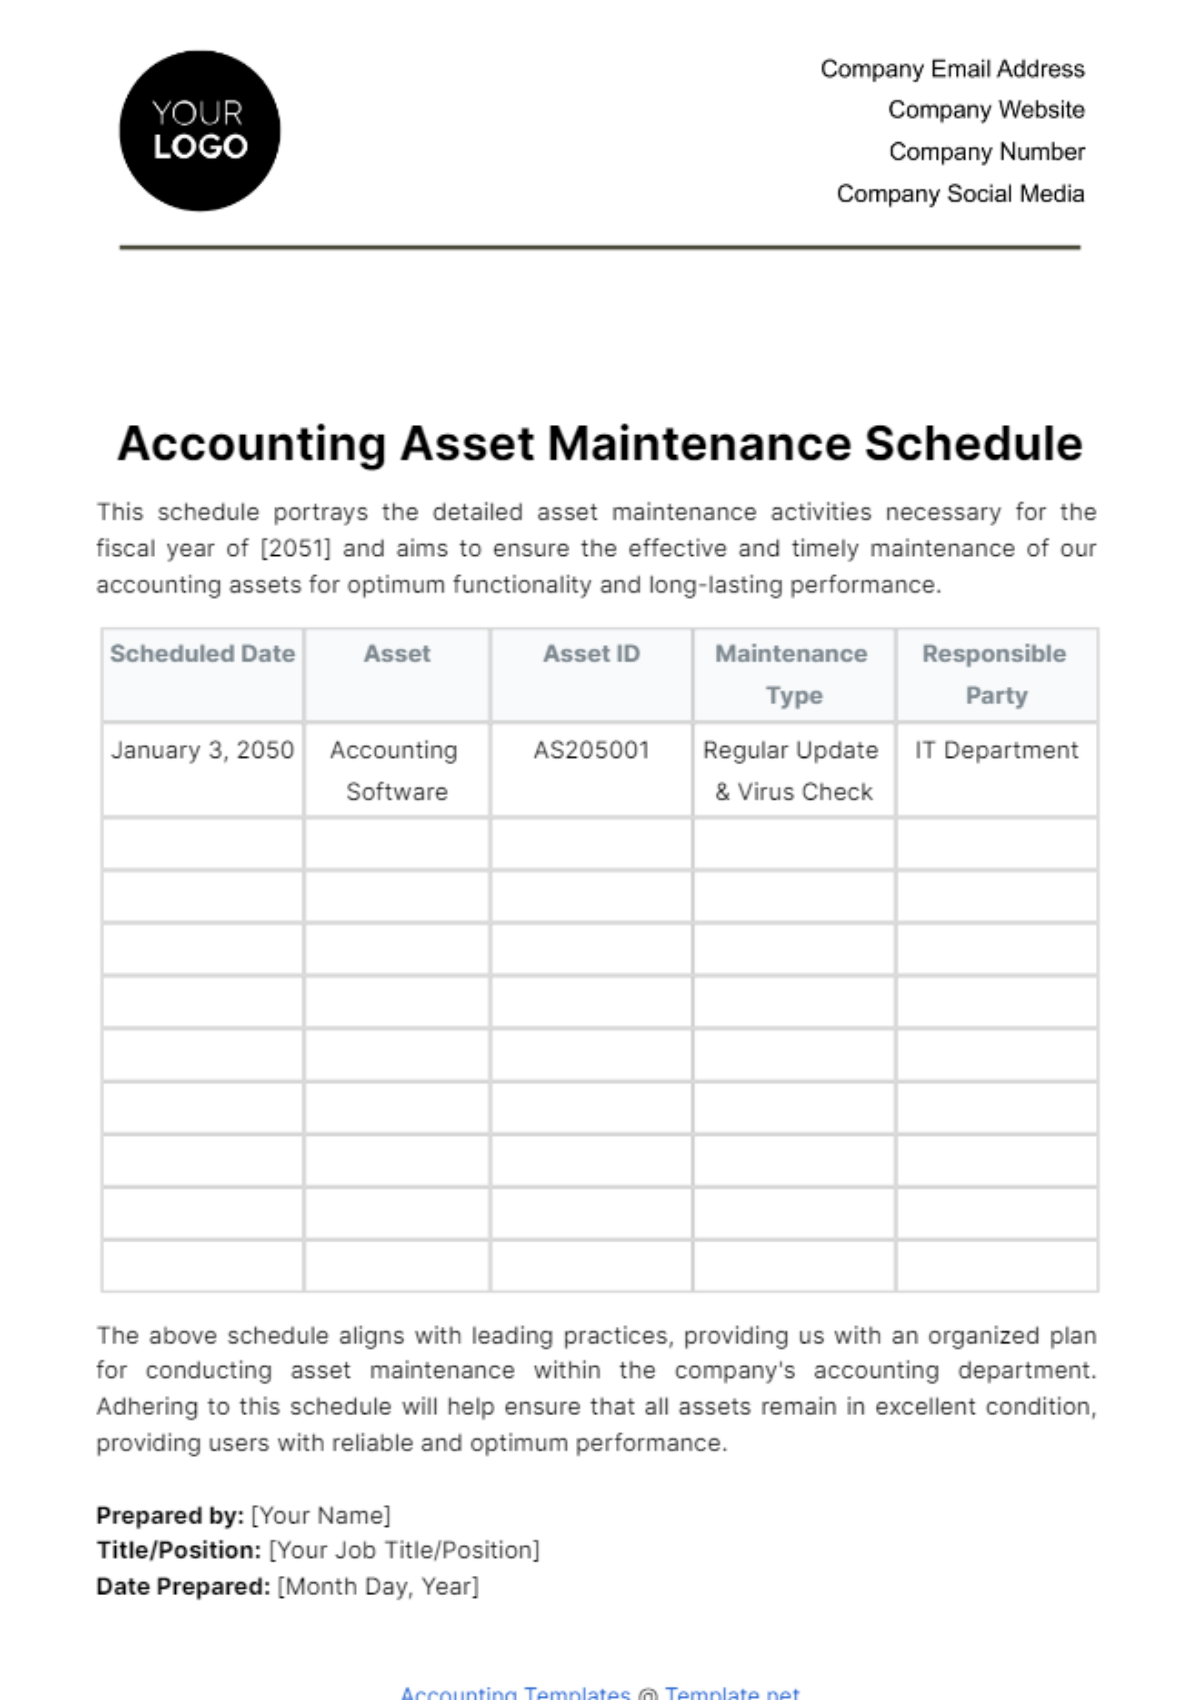 Accounting Asset Maintenance Schedule Template